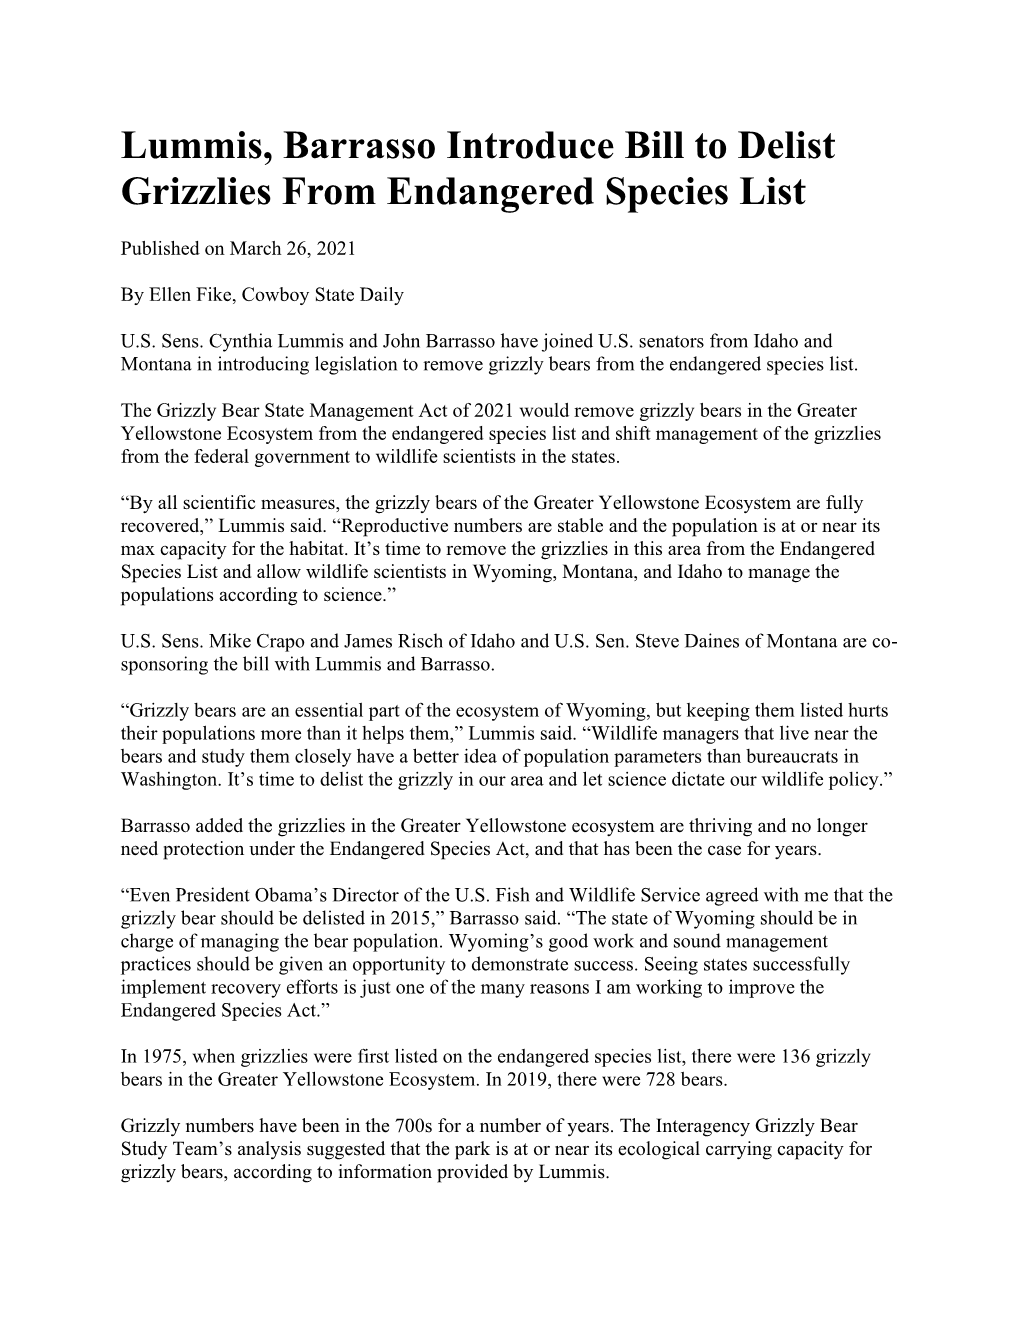 Lummis, Barrasso Introduce Bill to Delist Grizzlies from Endangered Species List